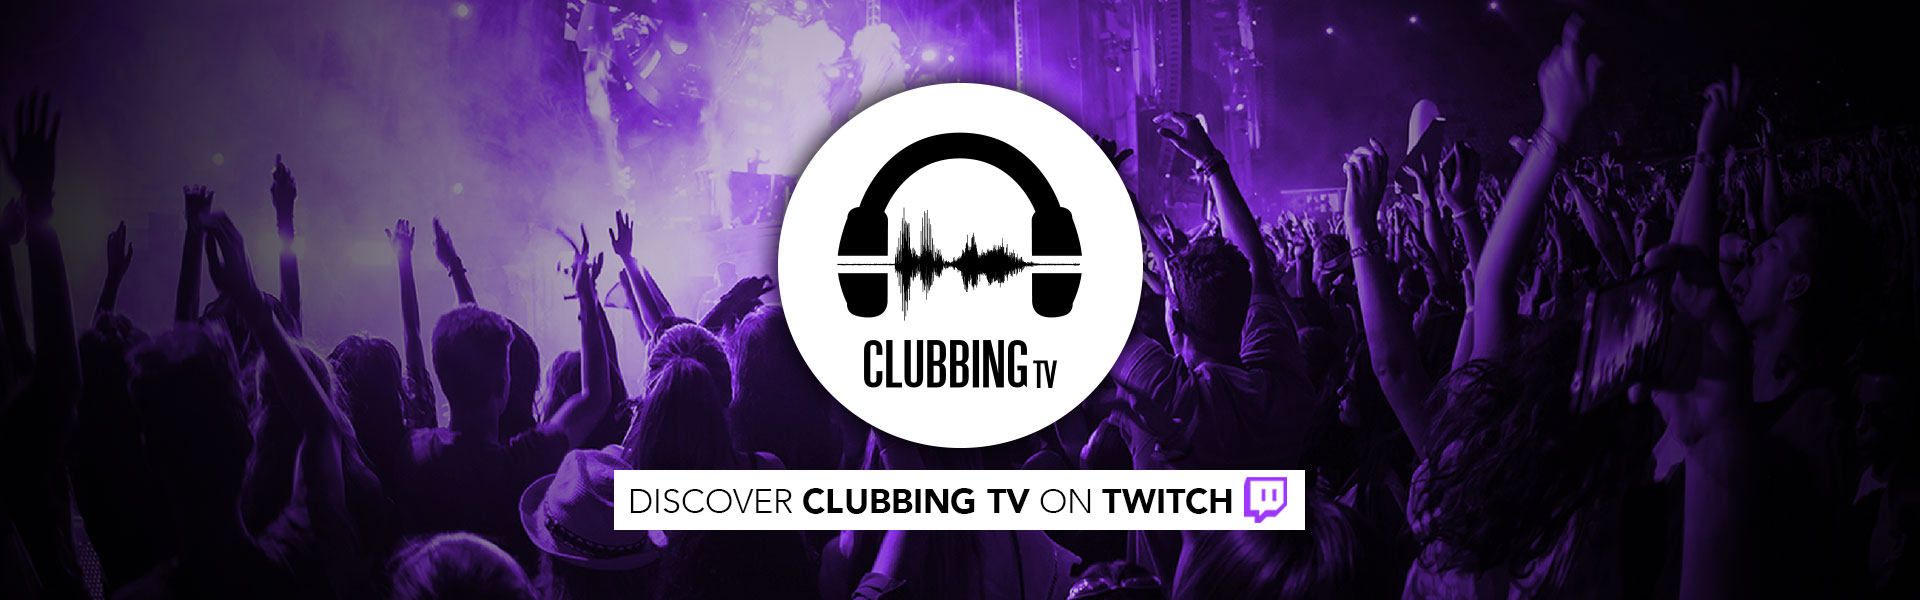 ClubbingTv on Twitch